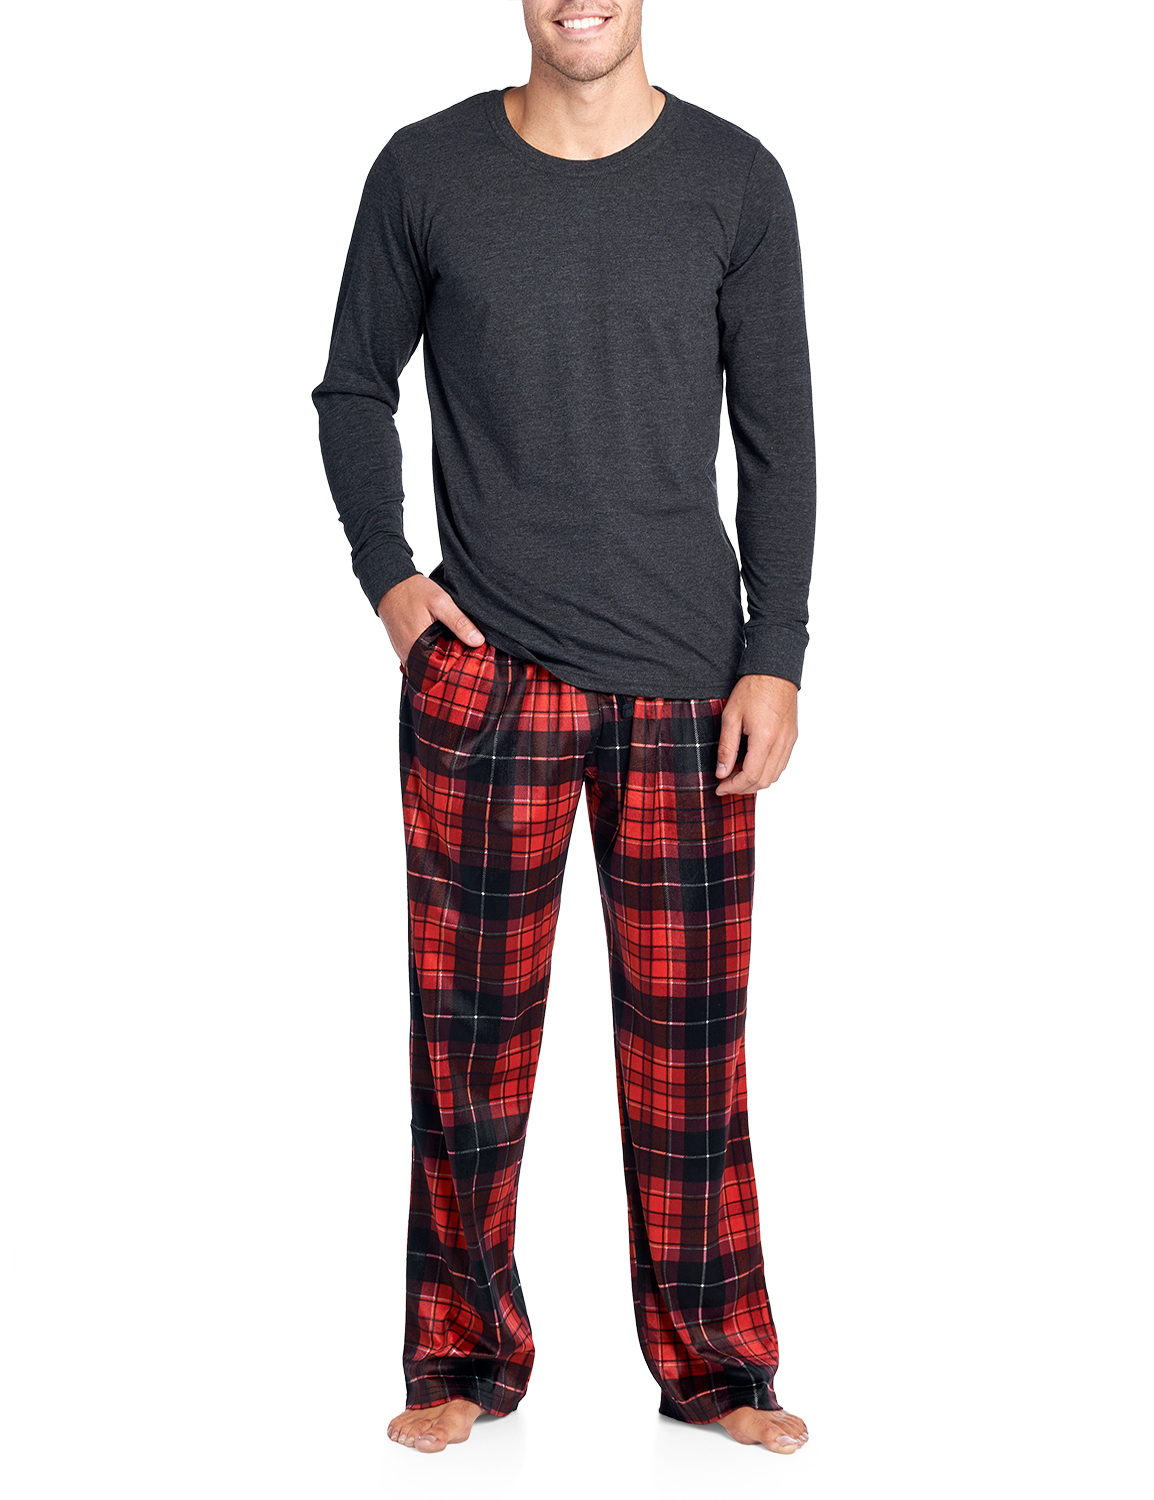 Ashford & Brooks Mens Flannel Long-Sleeve Top and Flannel Bottom Pajama Set 